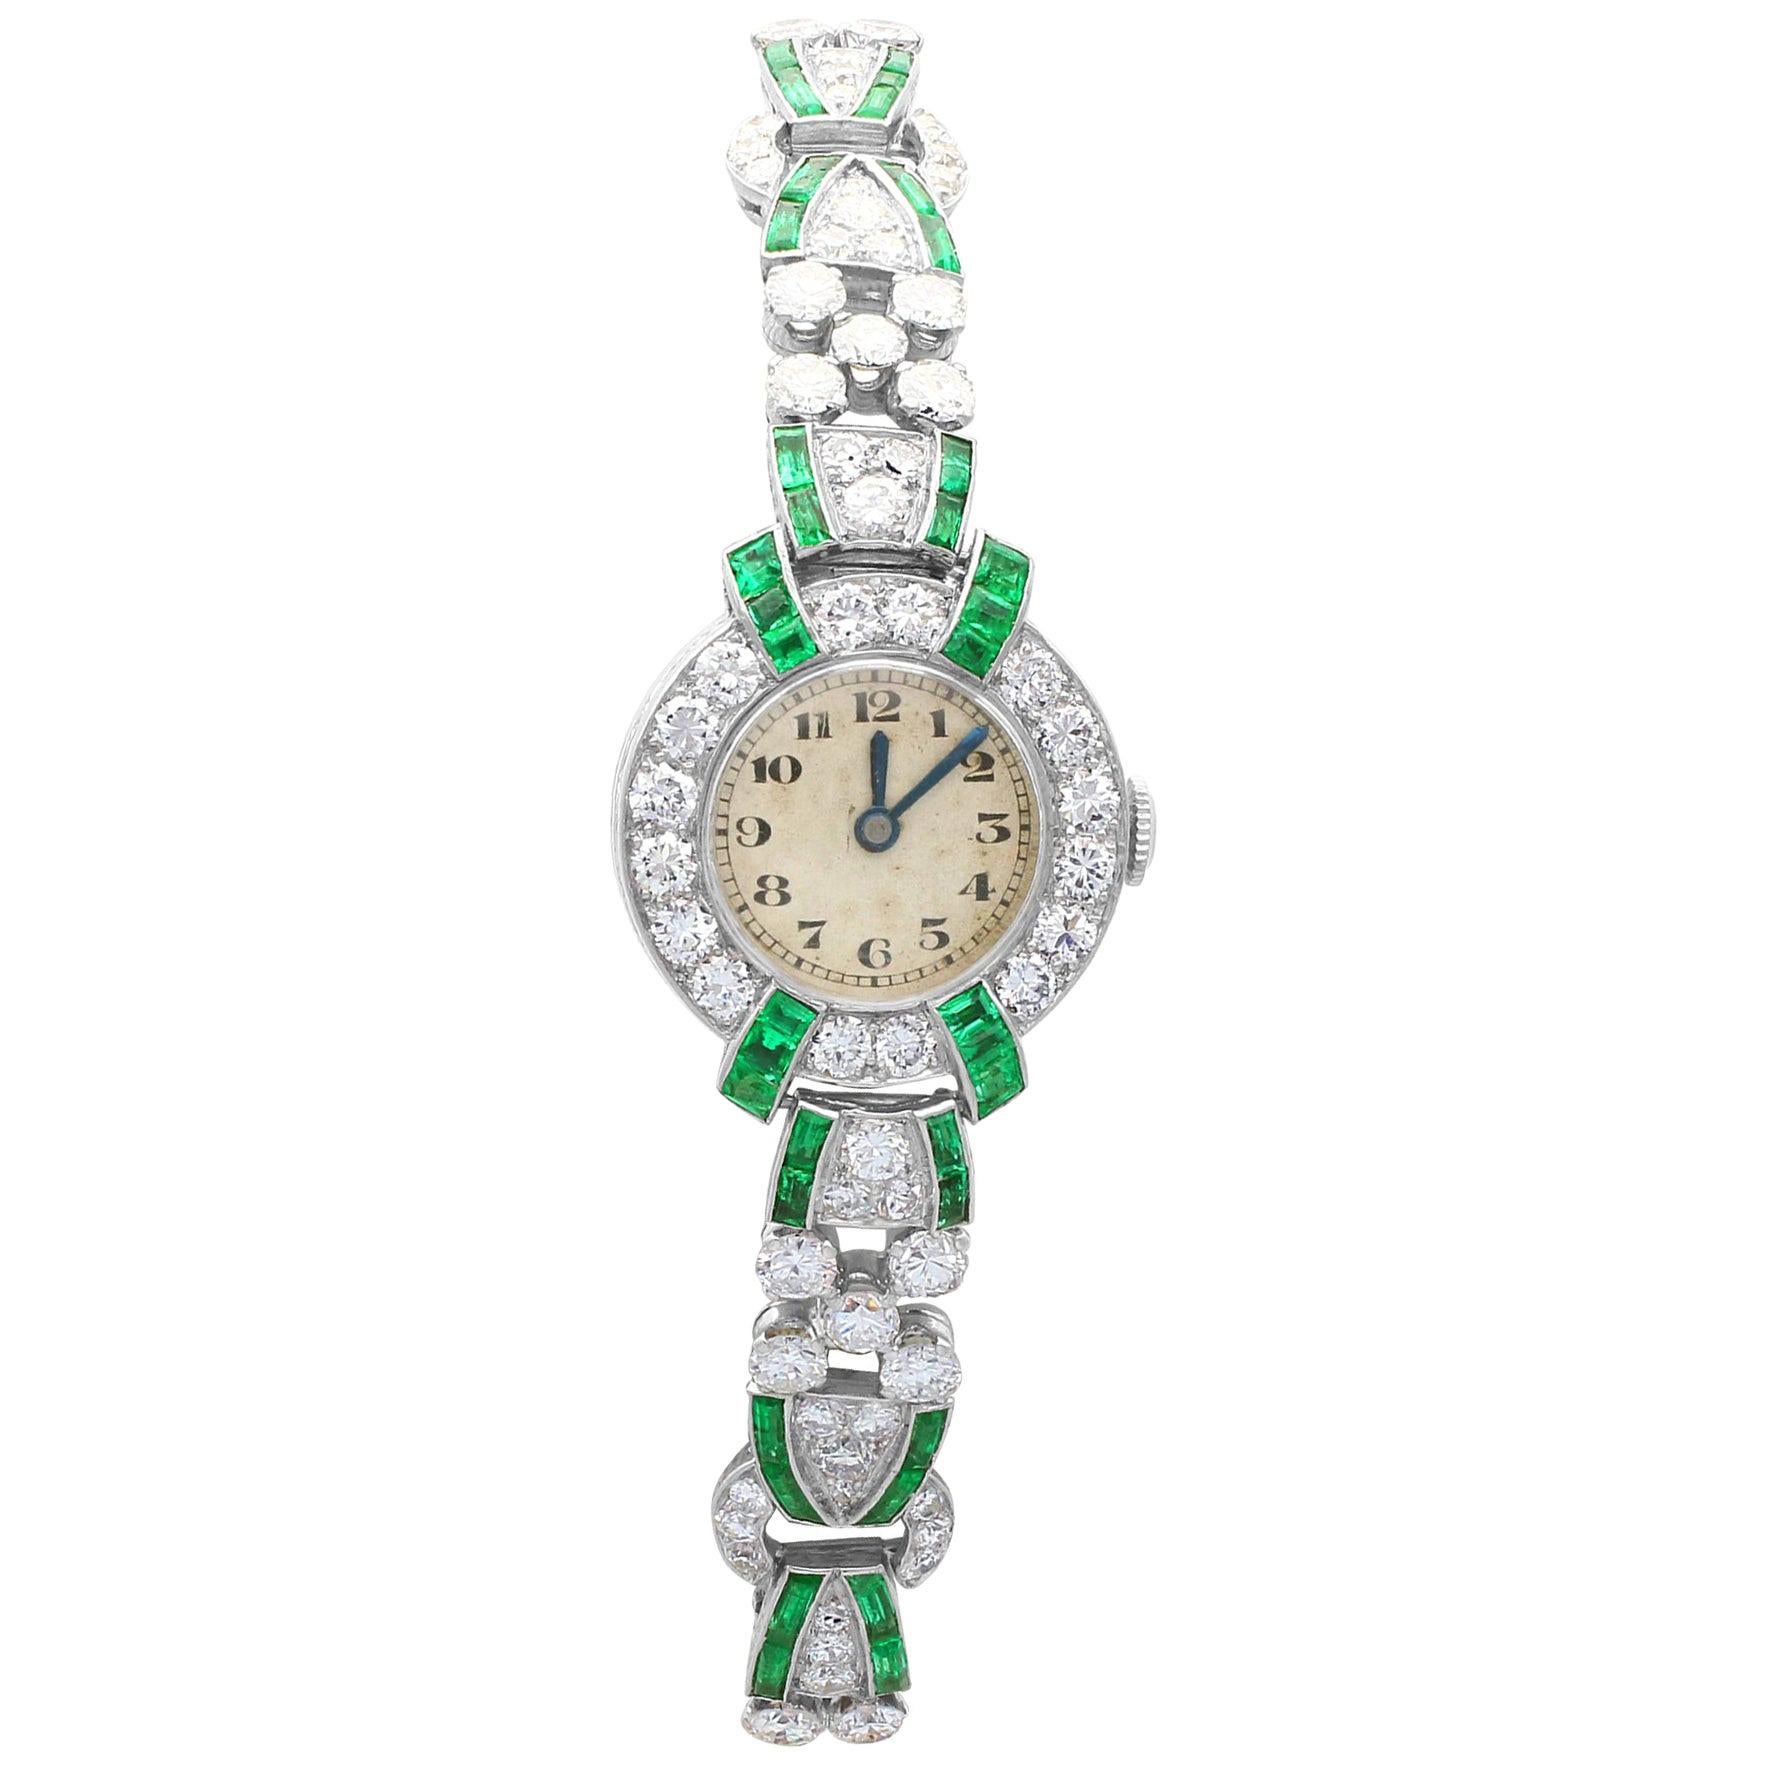 4.46ct Diamond and 1.61Ct Emerald Cocktail Watch in Platinum Circa 1953